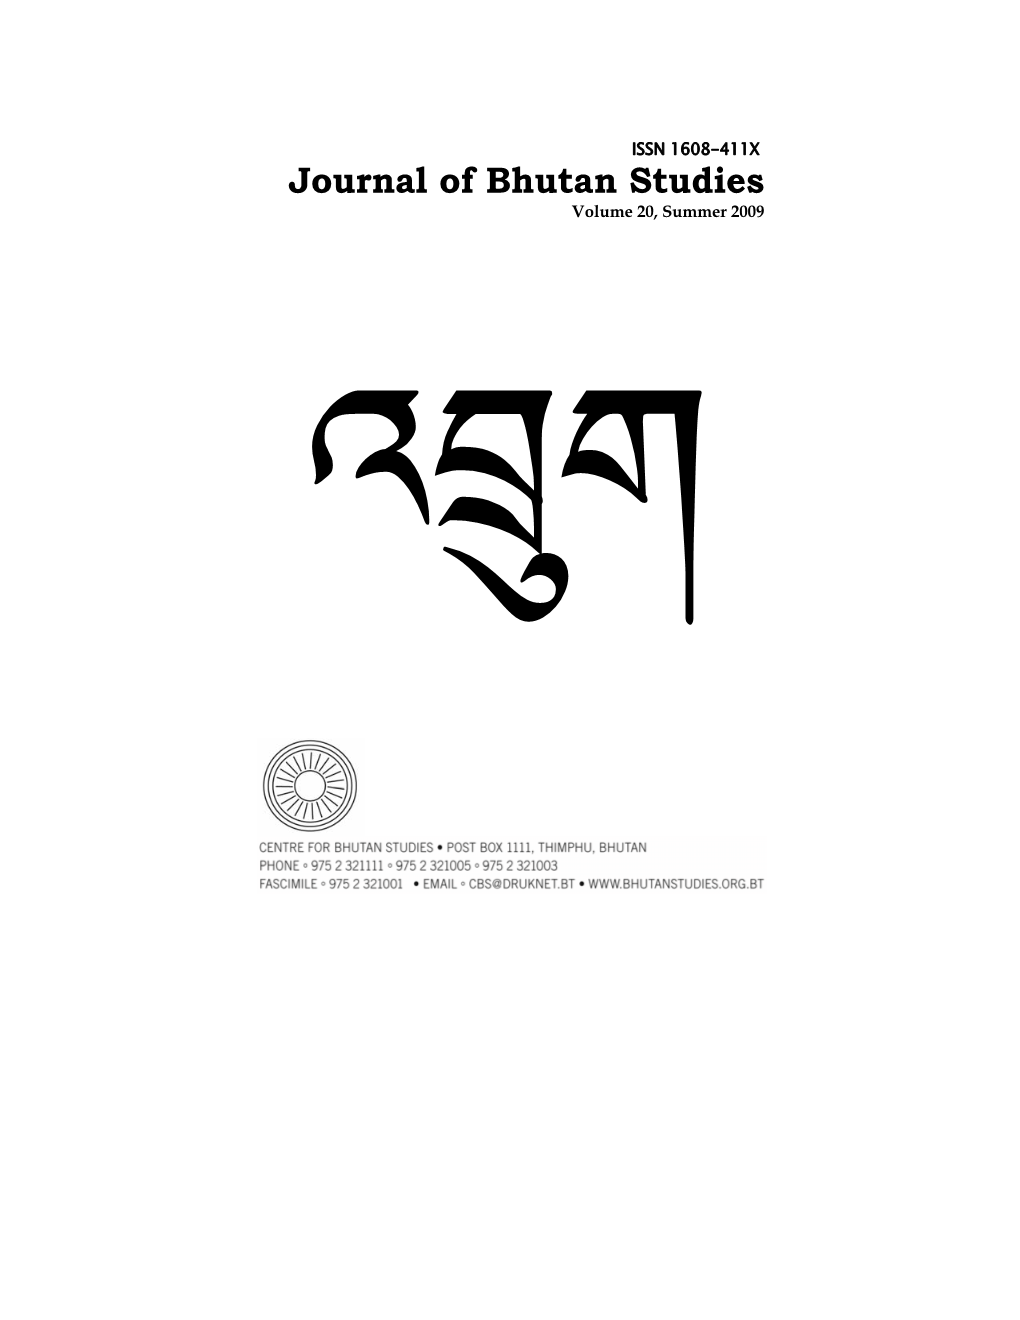 Journal of Bhutan Studies Volume 20, Summer 2009